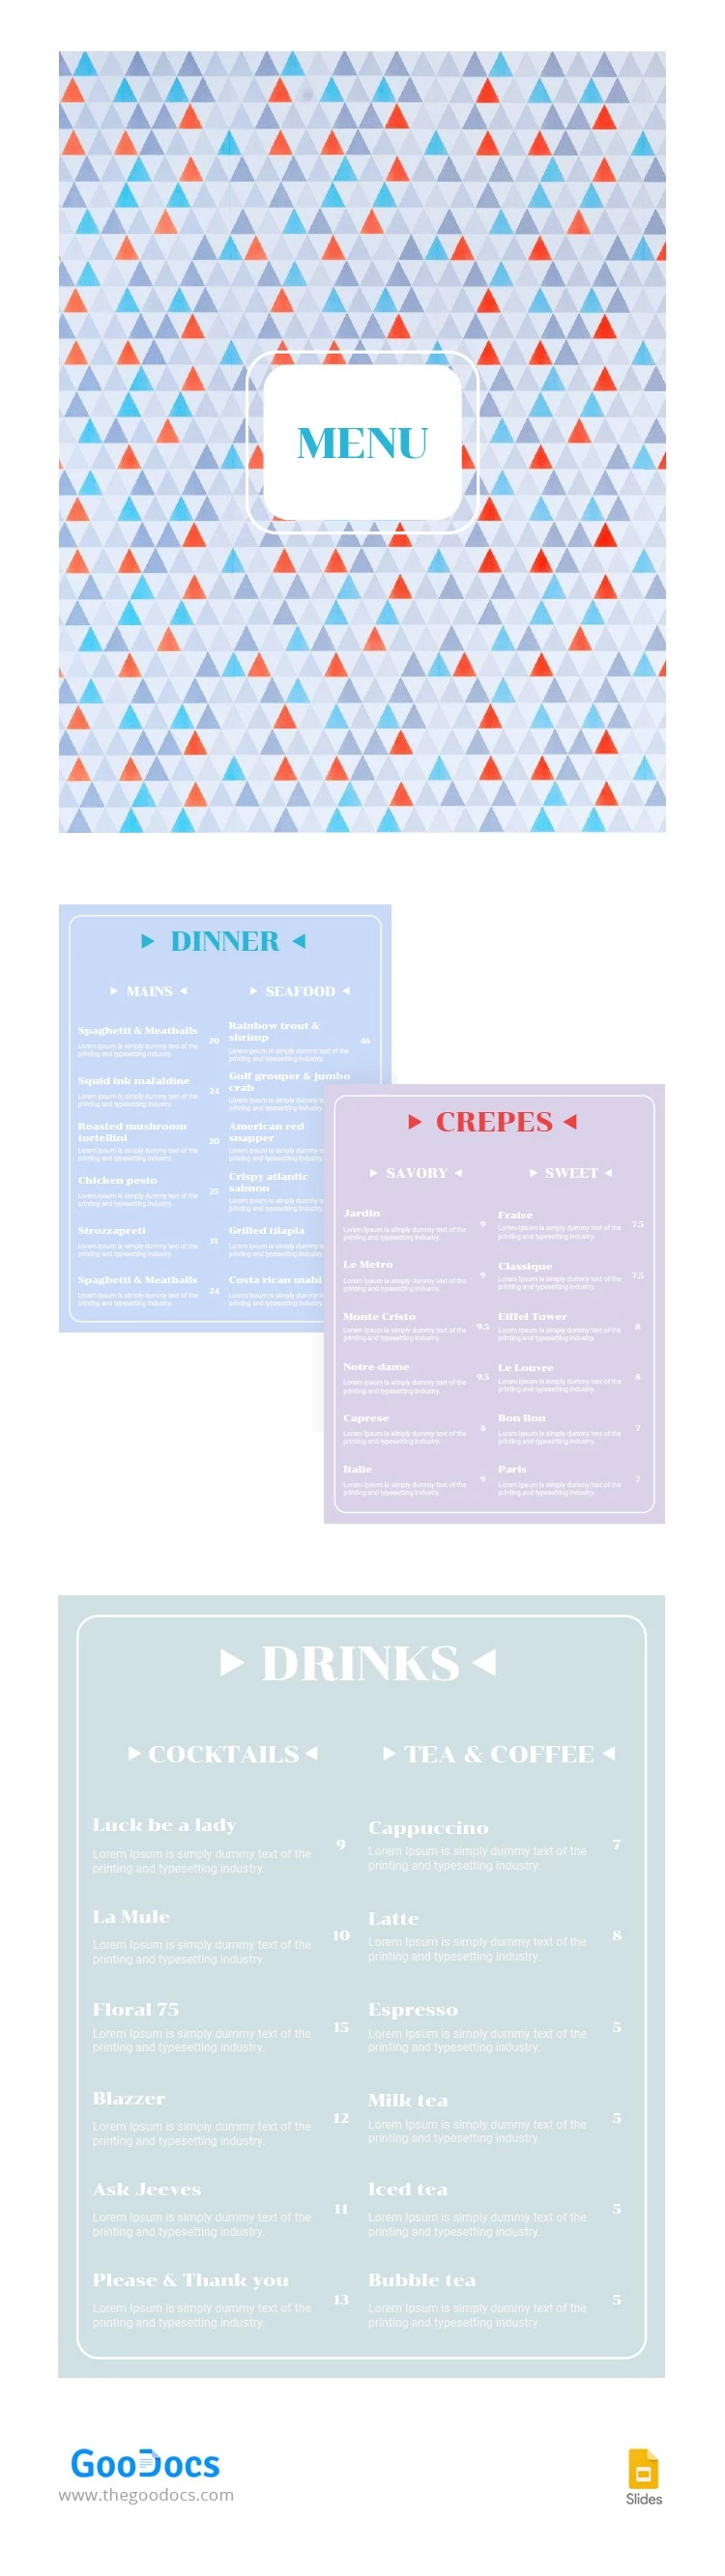 Menu du restaurant moderne - free Google Docs Template - 10062907